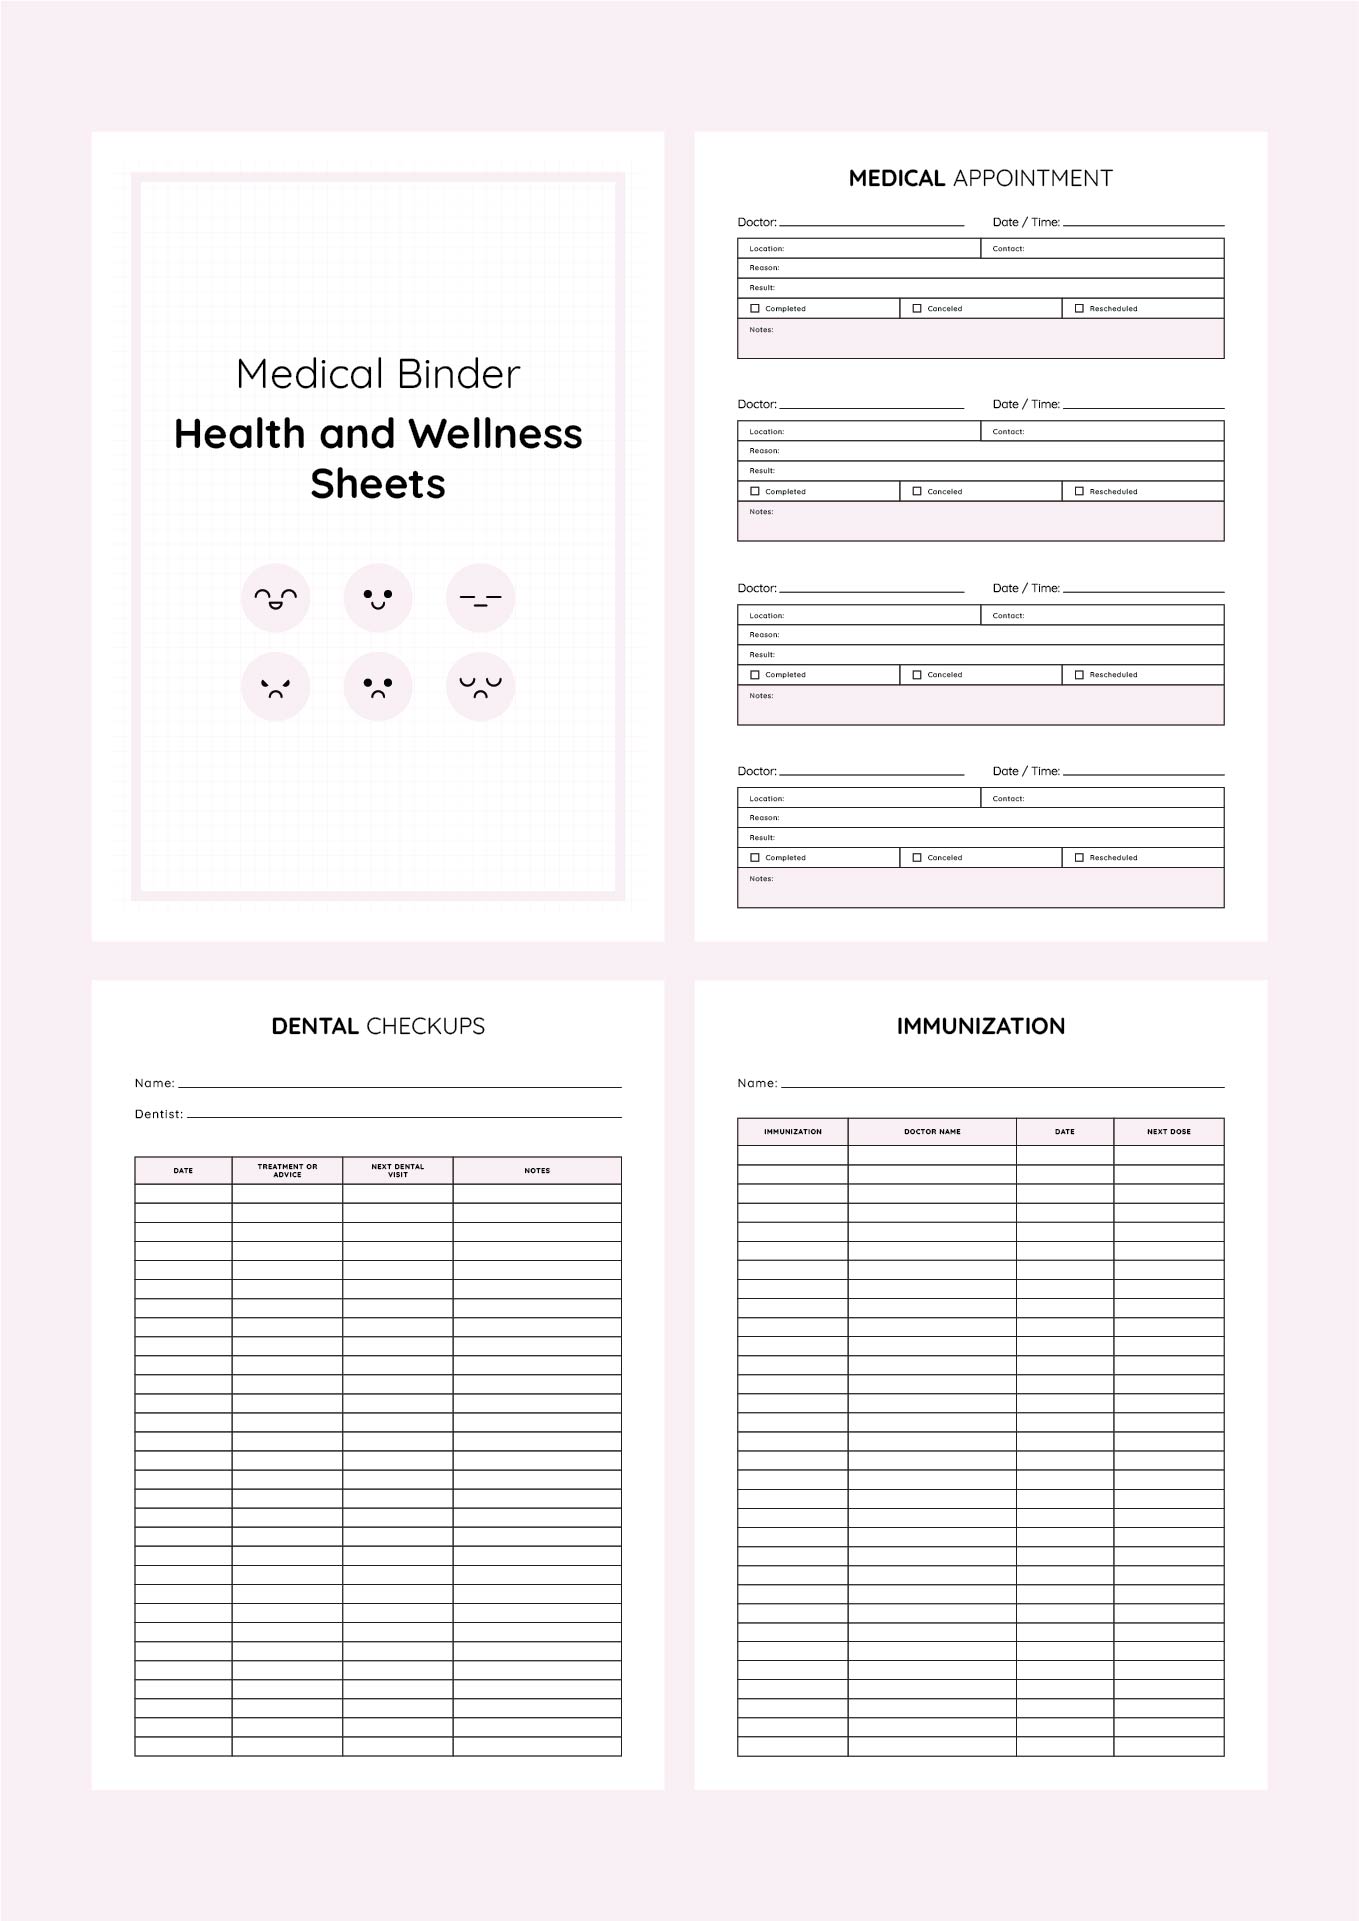 Medical Binder Printables Health And Wellness Sheets